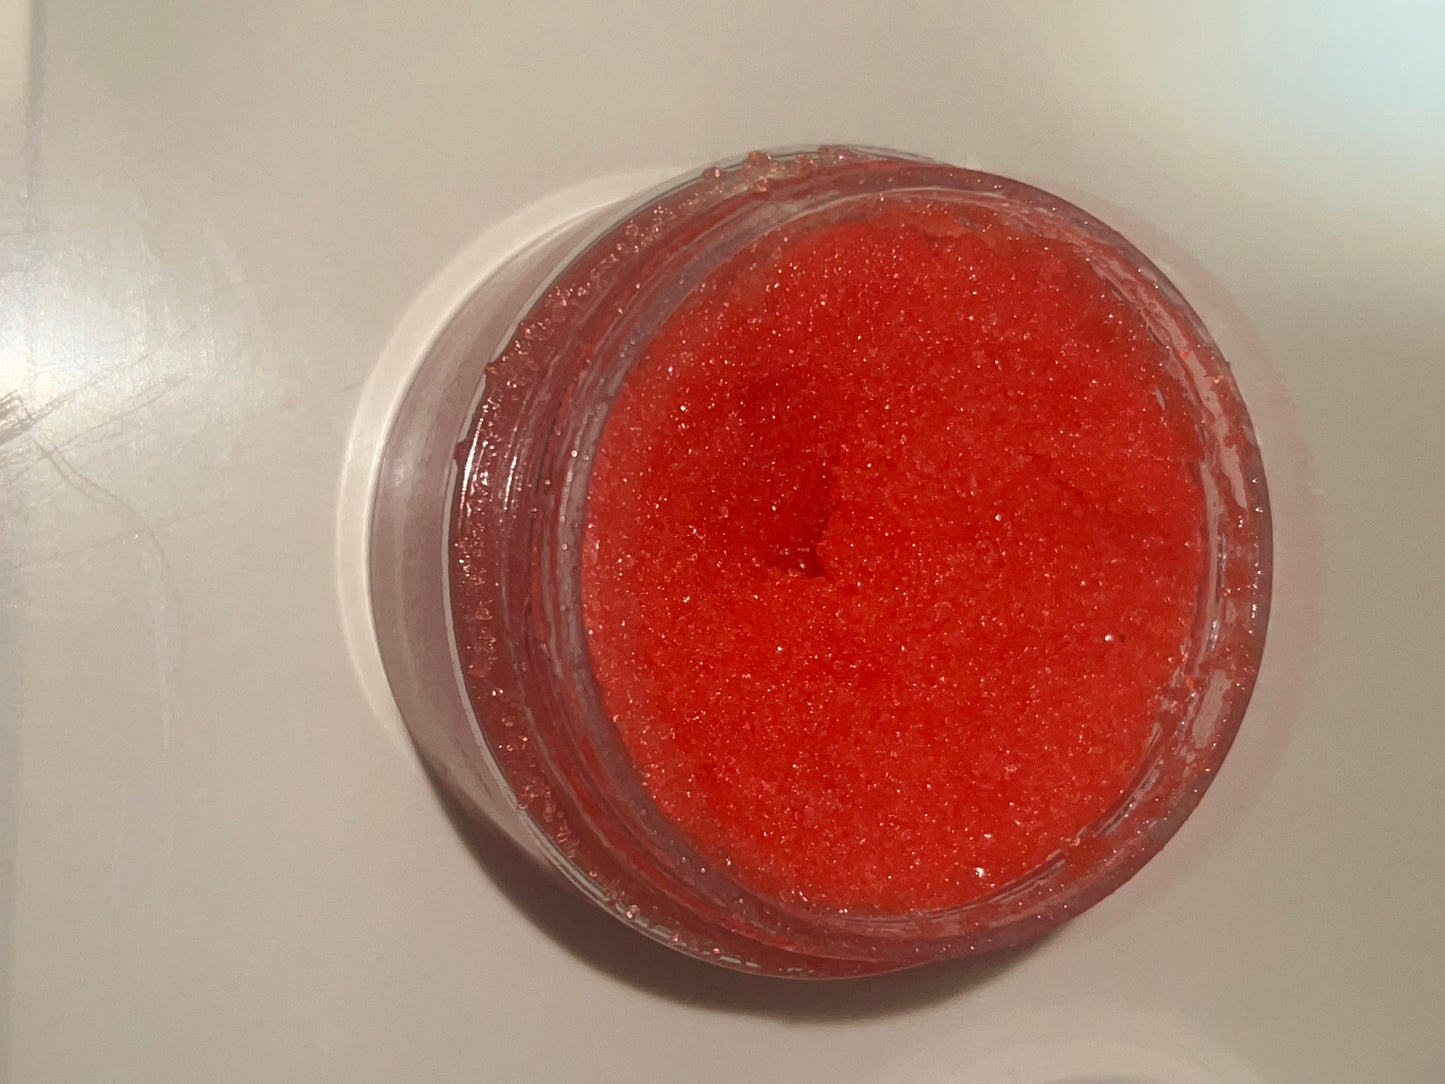 Red Cherry lip scrub